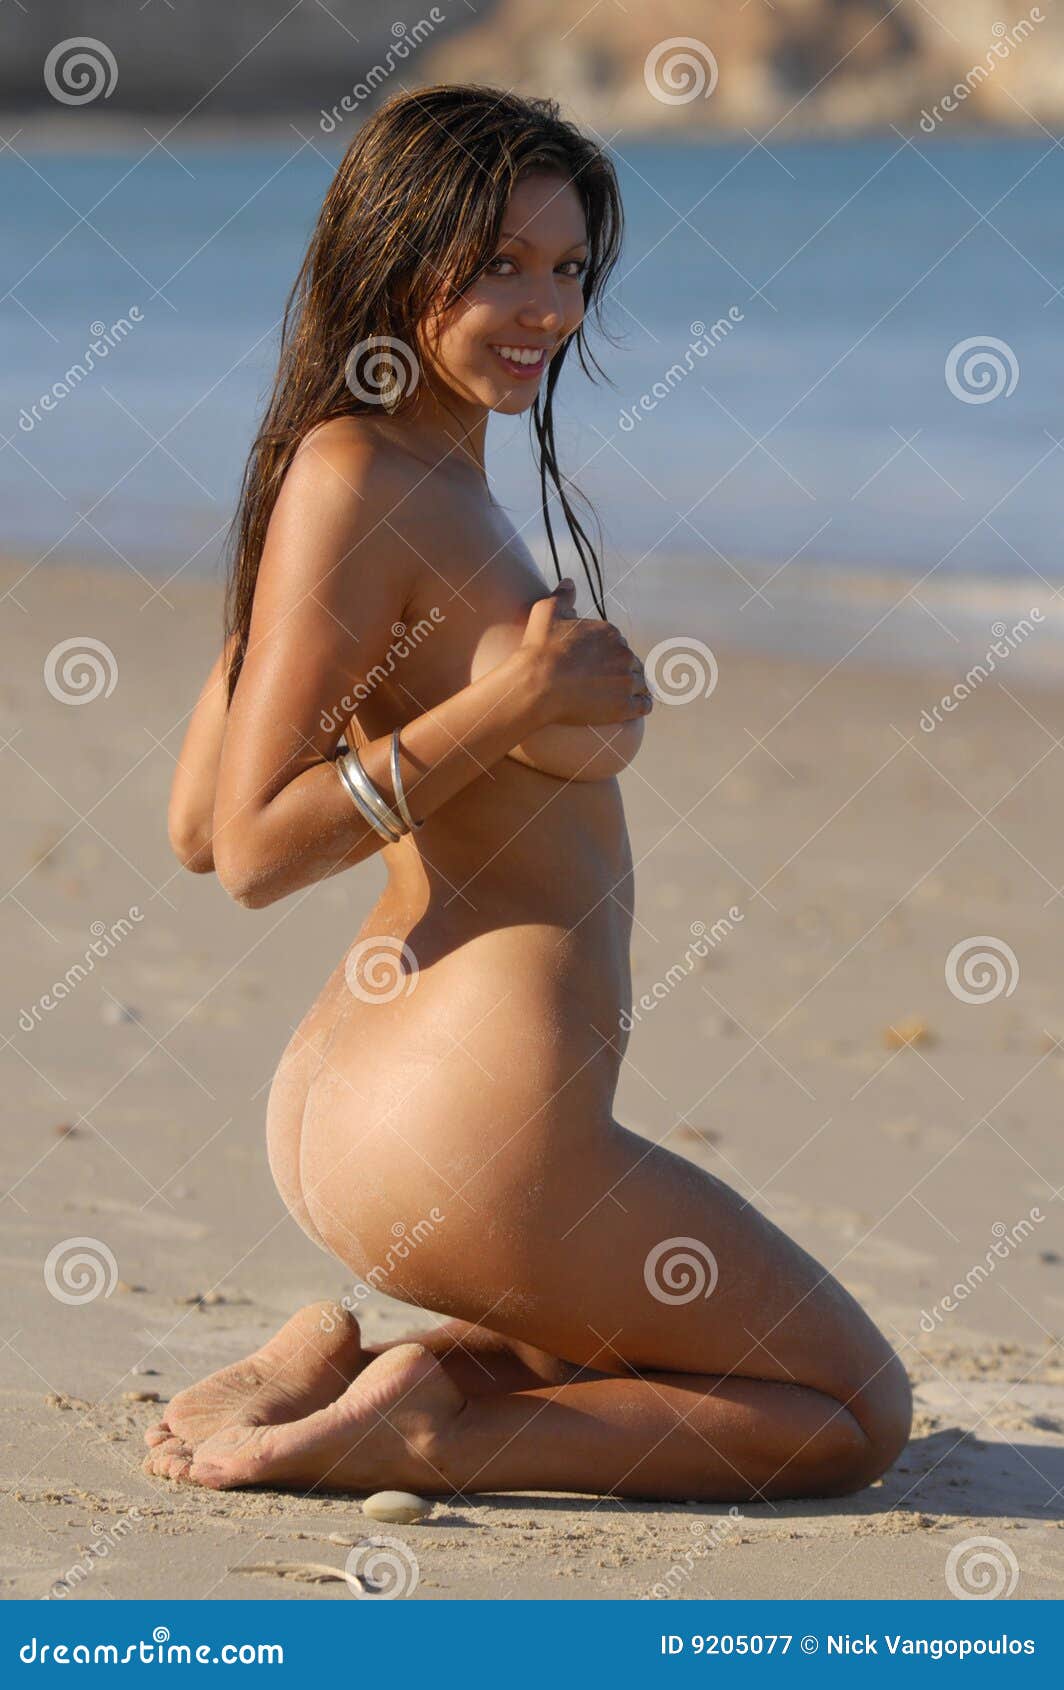 Girls nude in beach